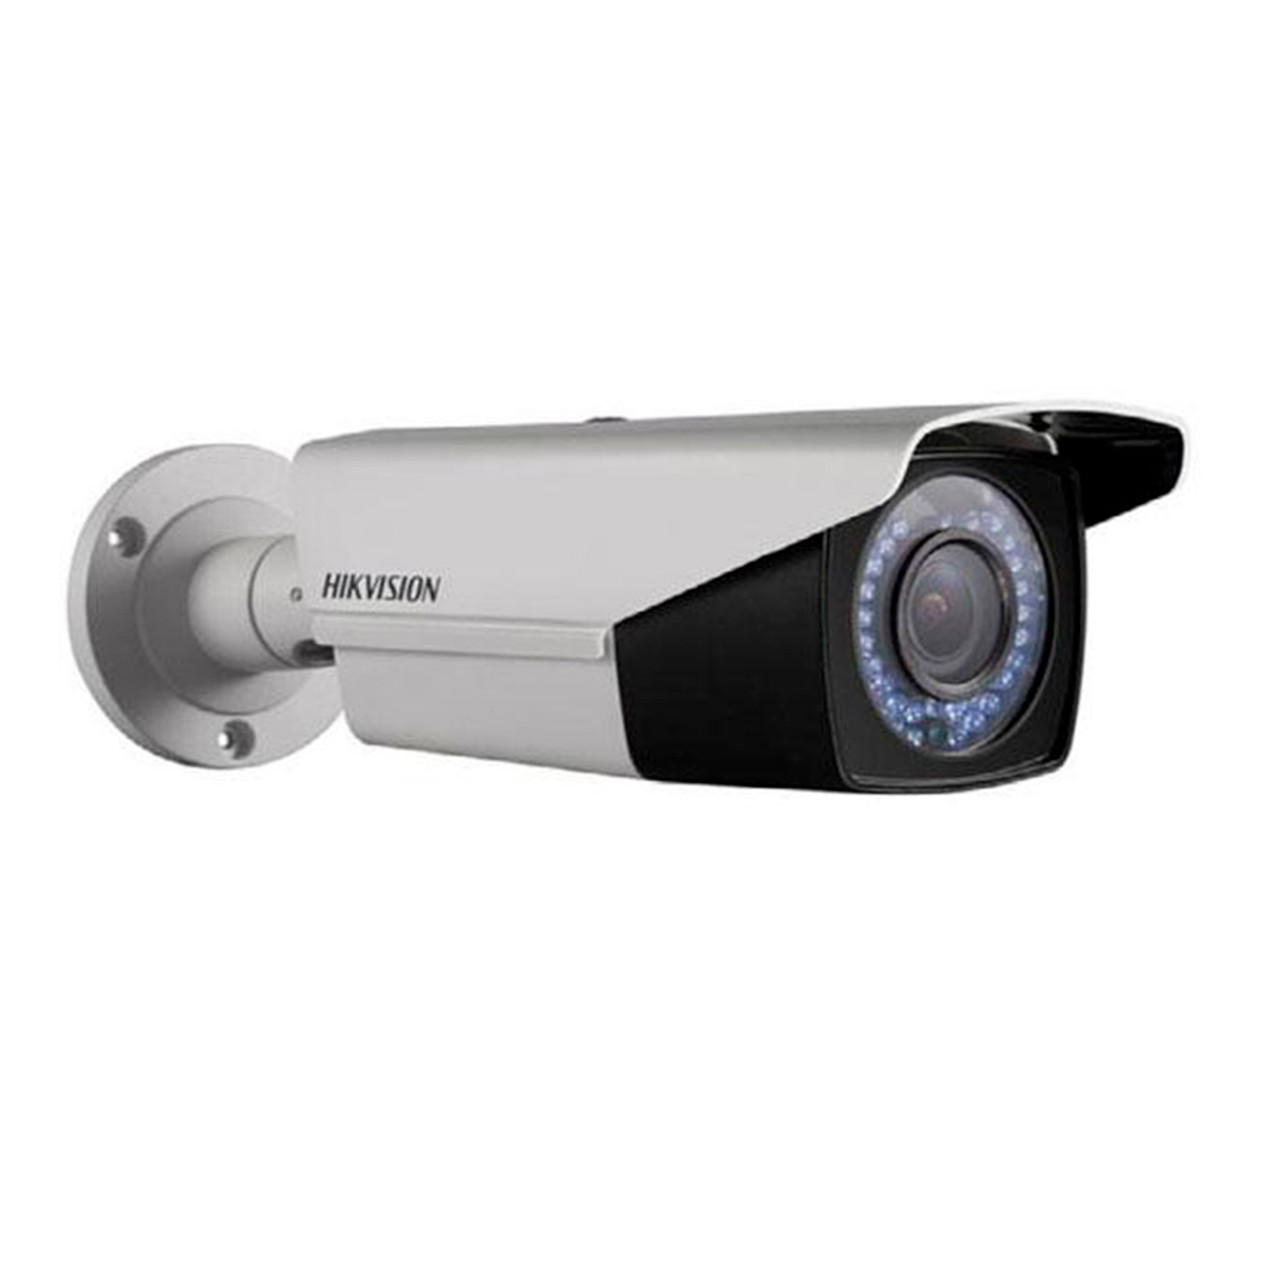 hikvision turbo hd 2mp bullet camera